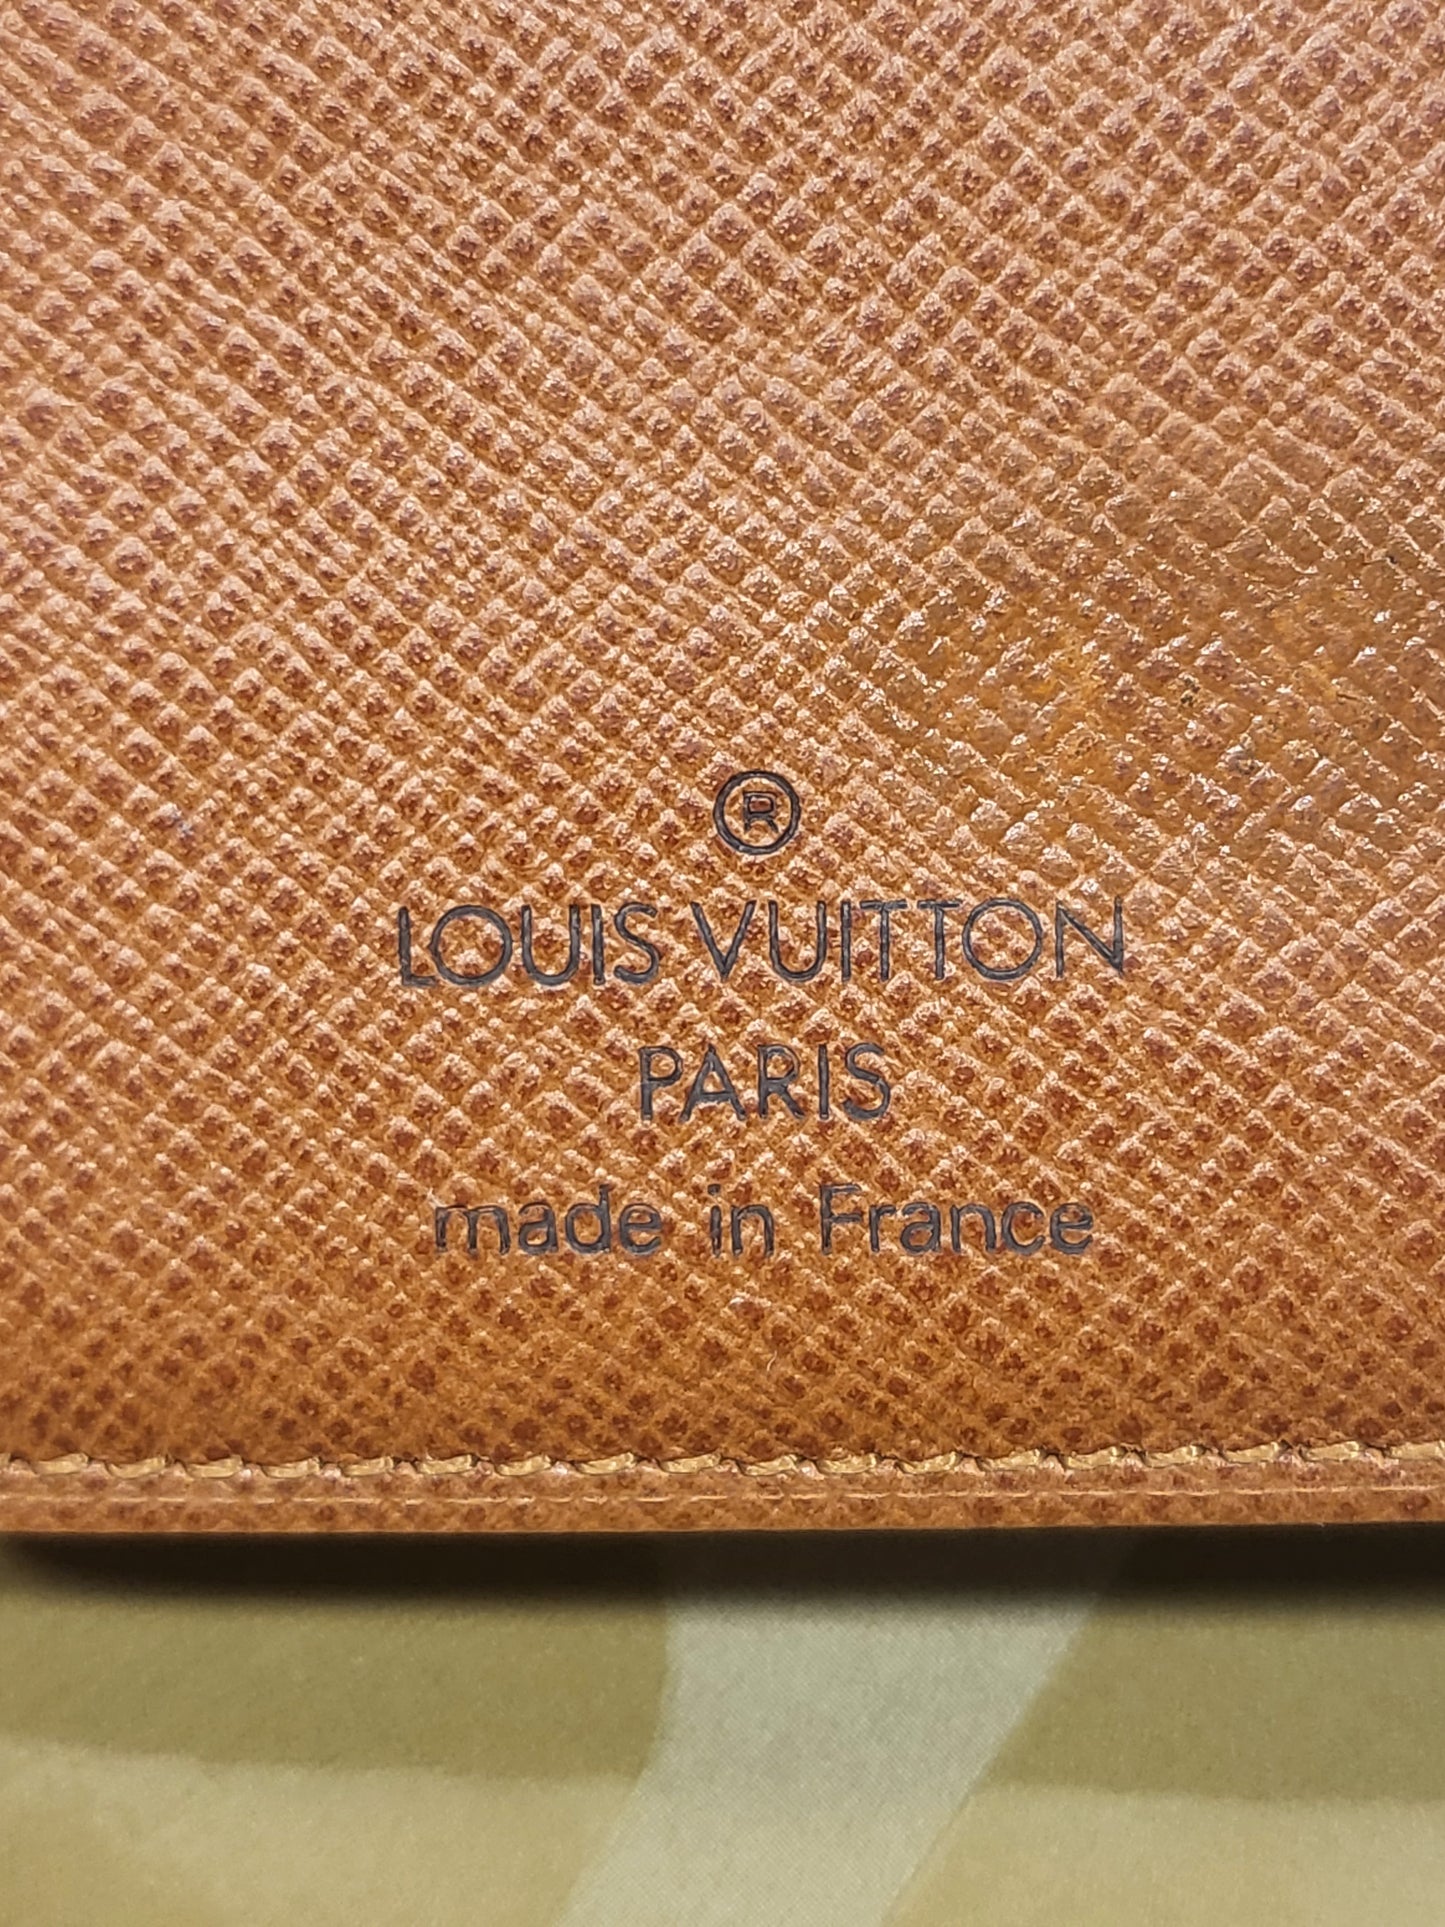 Authentic pre-owned Louis Vuitton Agenda pm